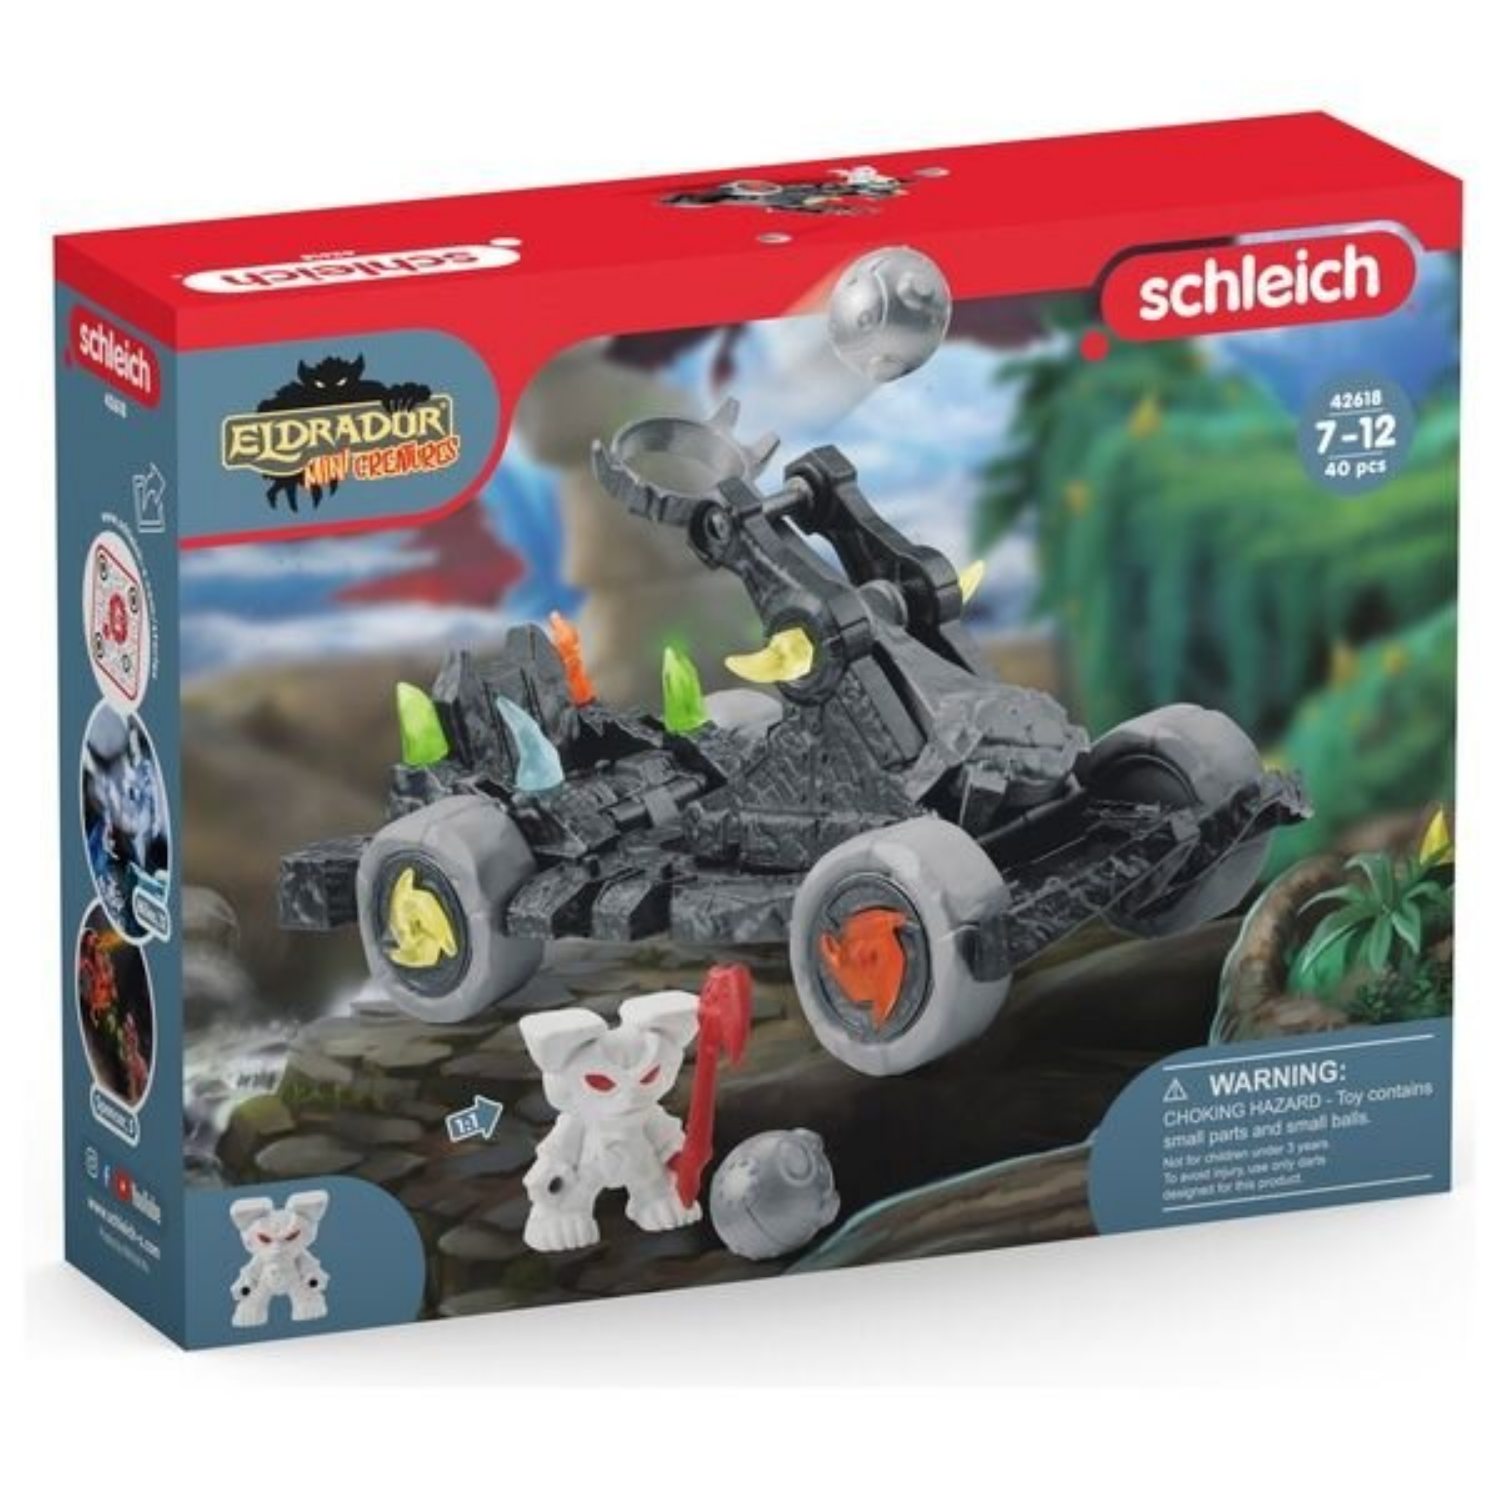 Schleich 42618 Catapult with Mini Creature